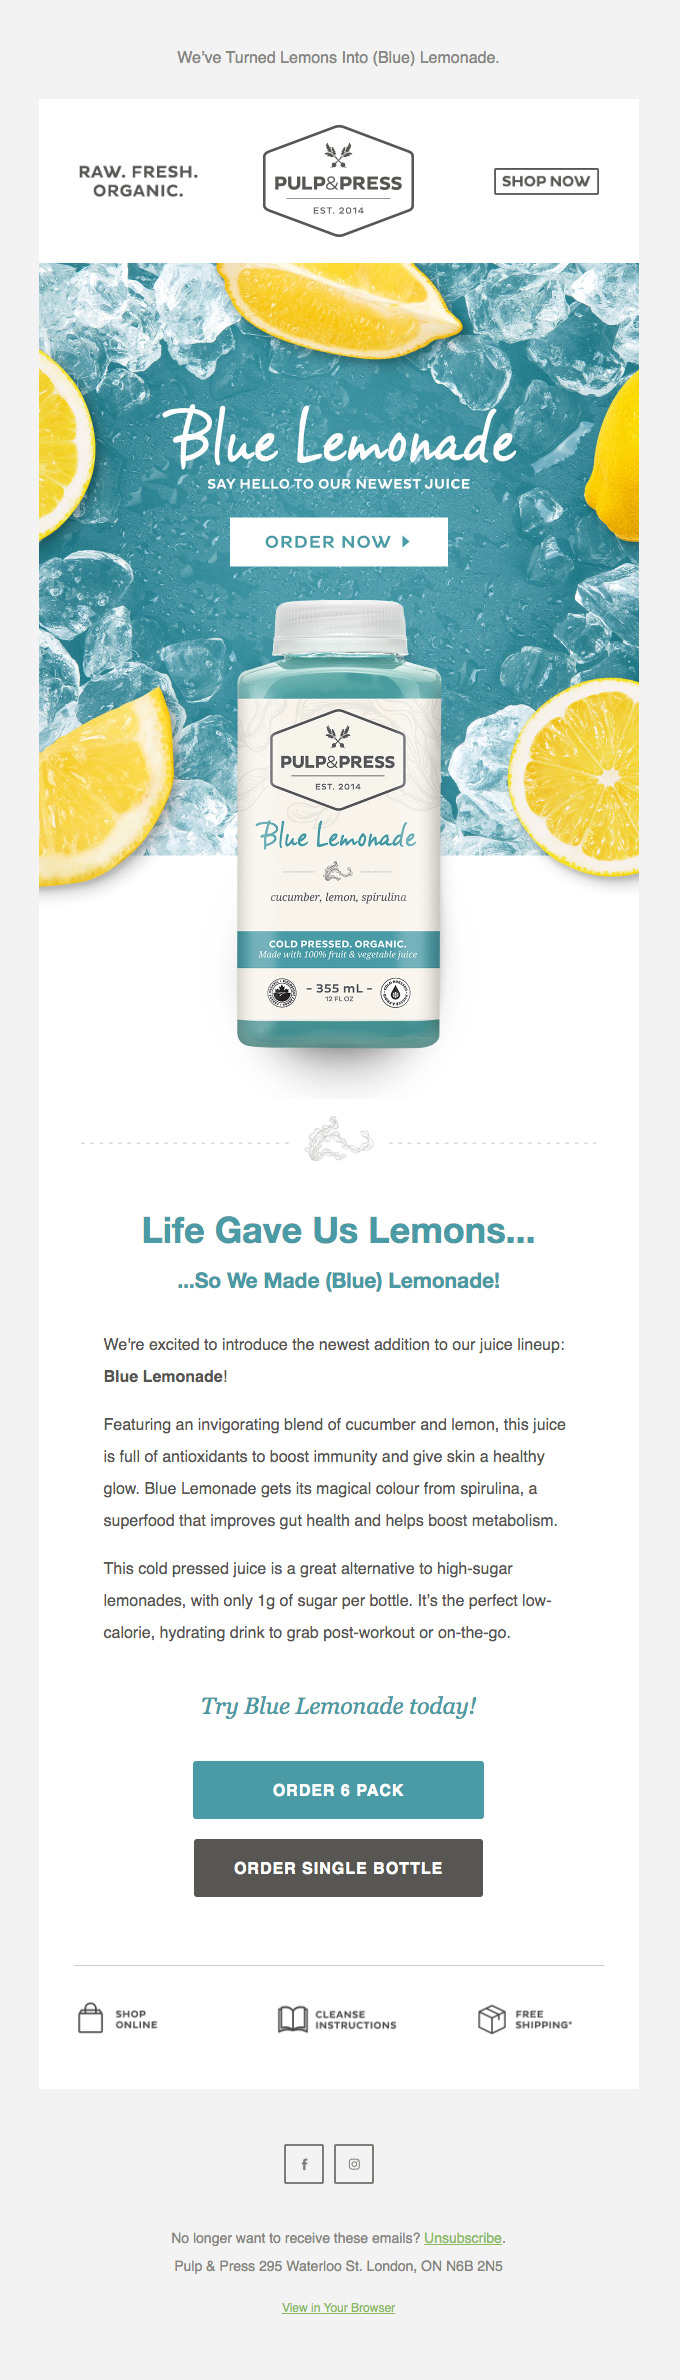 Introducing Our Newest Juice: Blue Lemonade 💙🍋